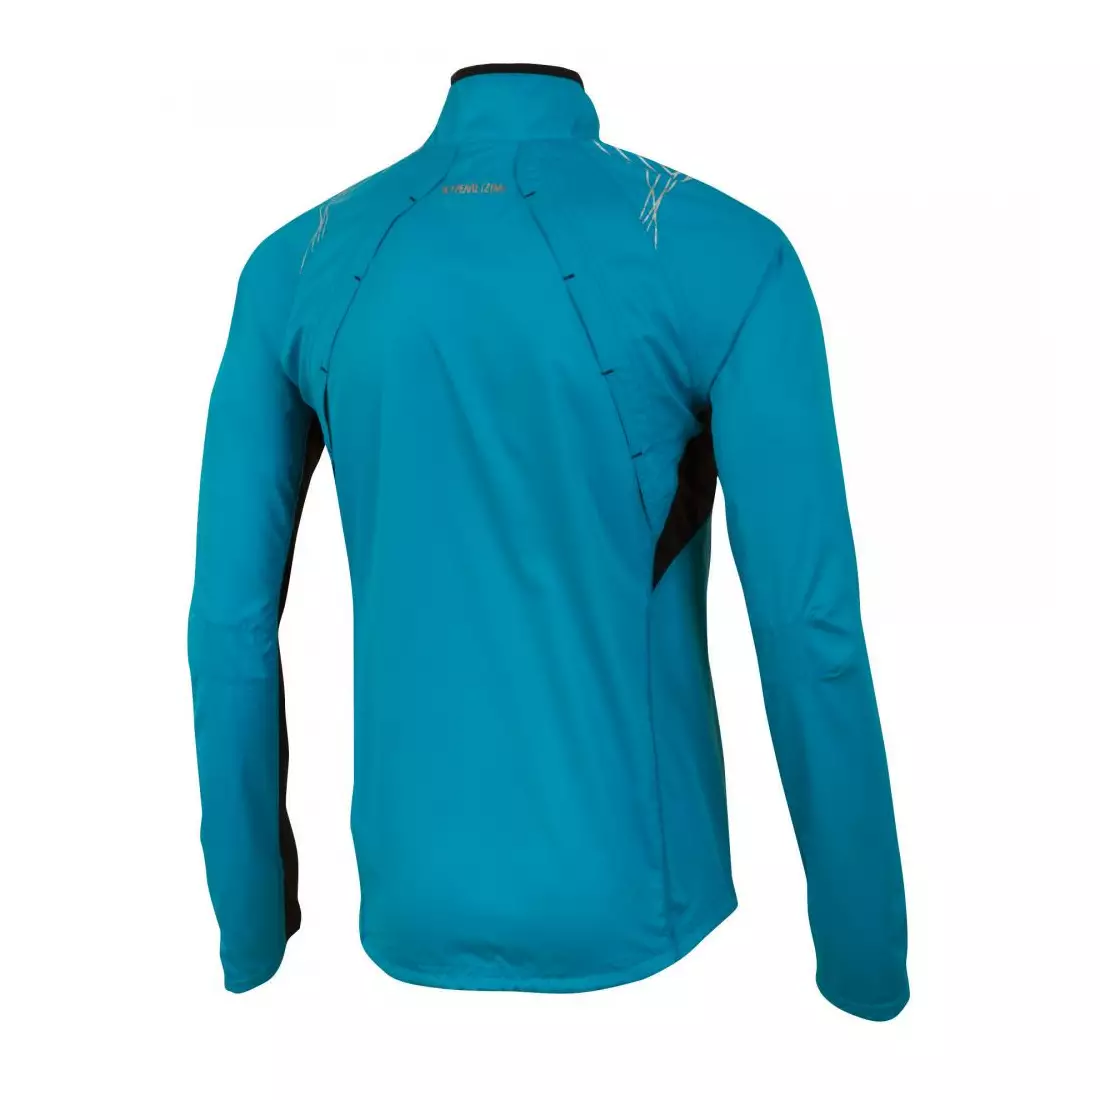 PEARL IZUMI - ELITE Infinity Jacket 12131101-3PK - men's running jacket, color: Blue